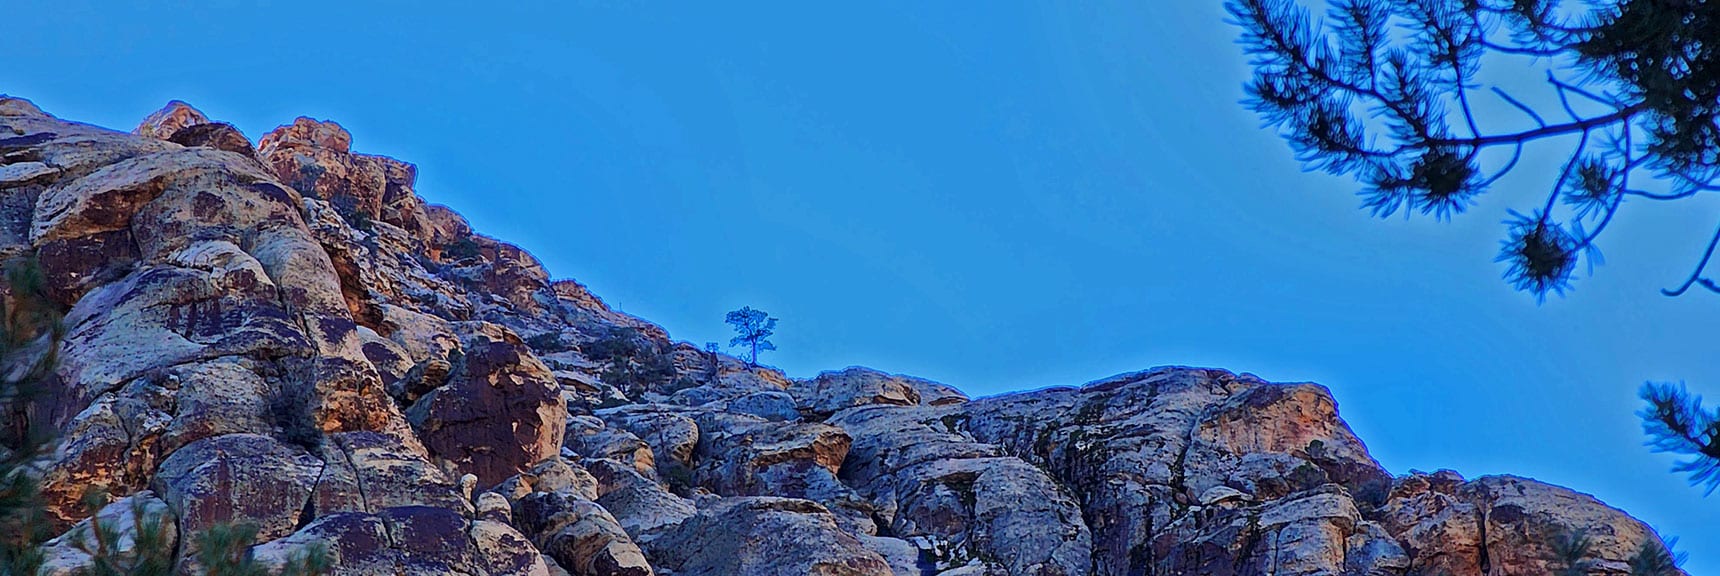 Lone Pine Tree on White Rock Mountain Summit Line | White Rock Mountain Loop Trail | Red Rock Canyon, Nevada